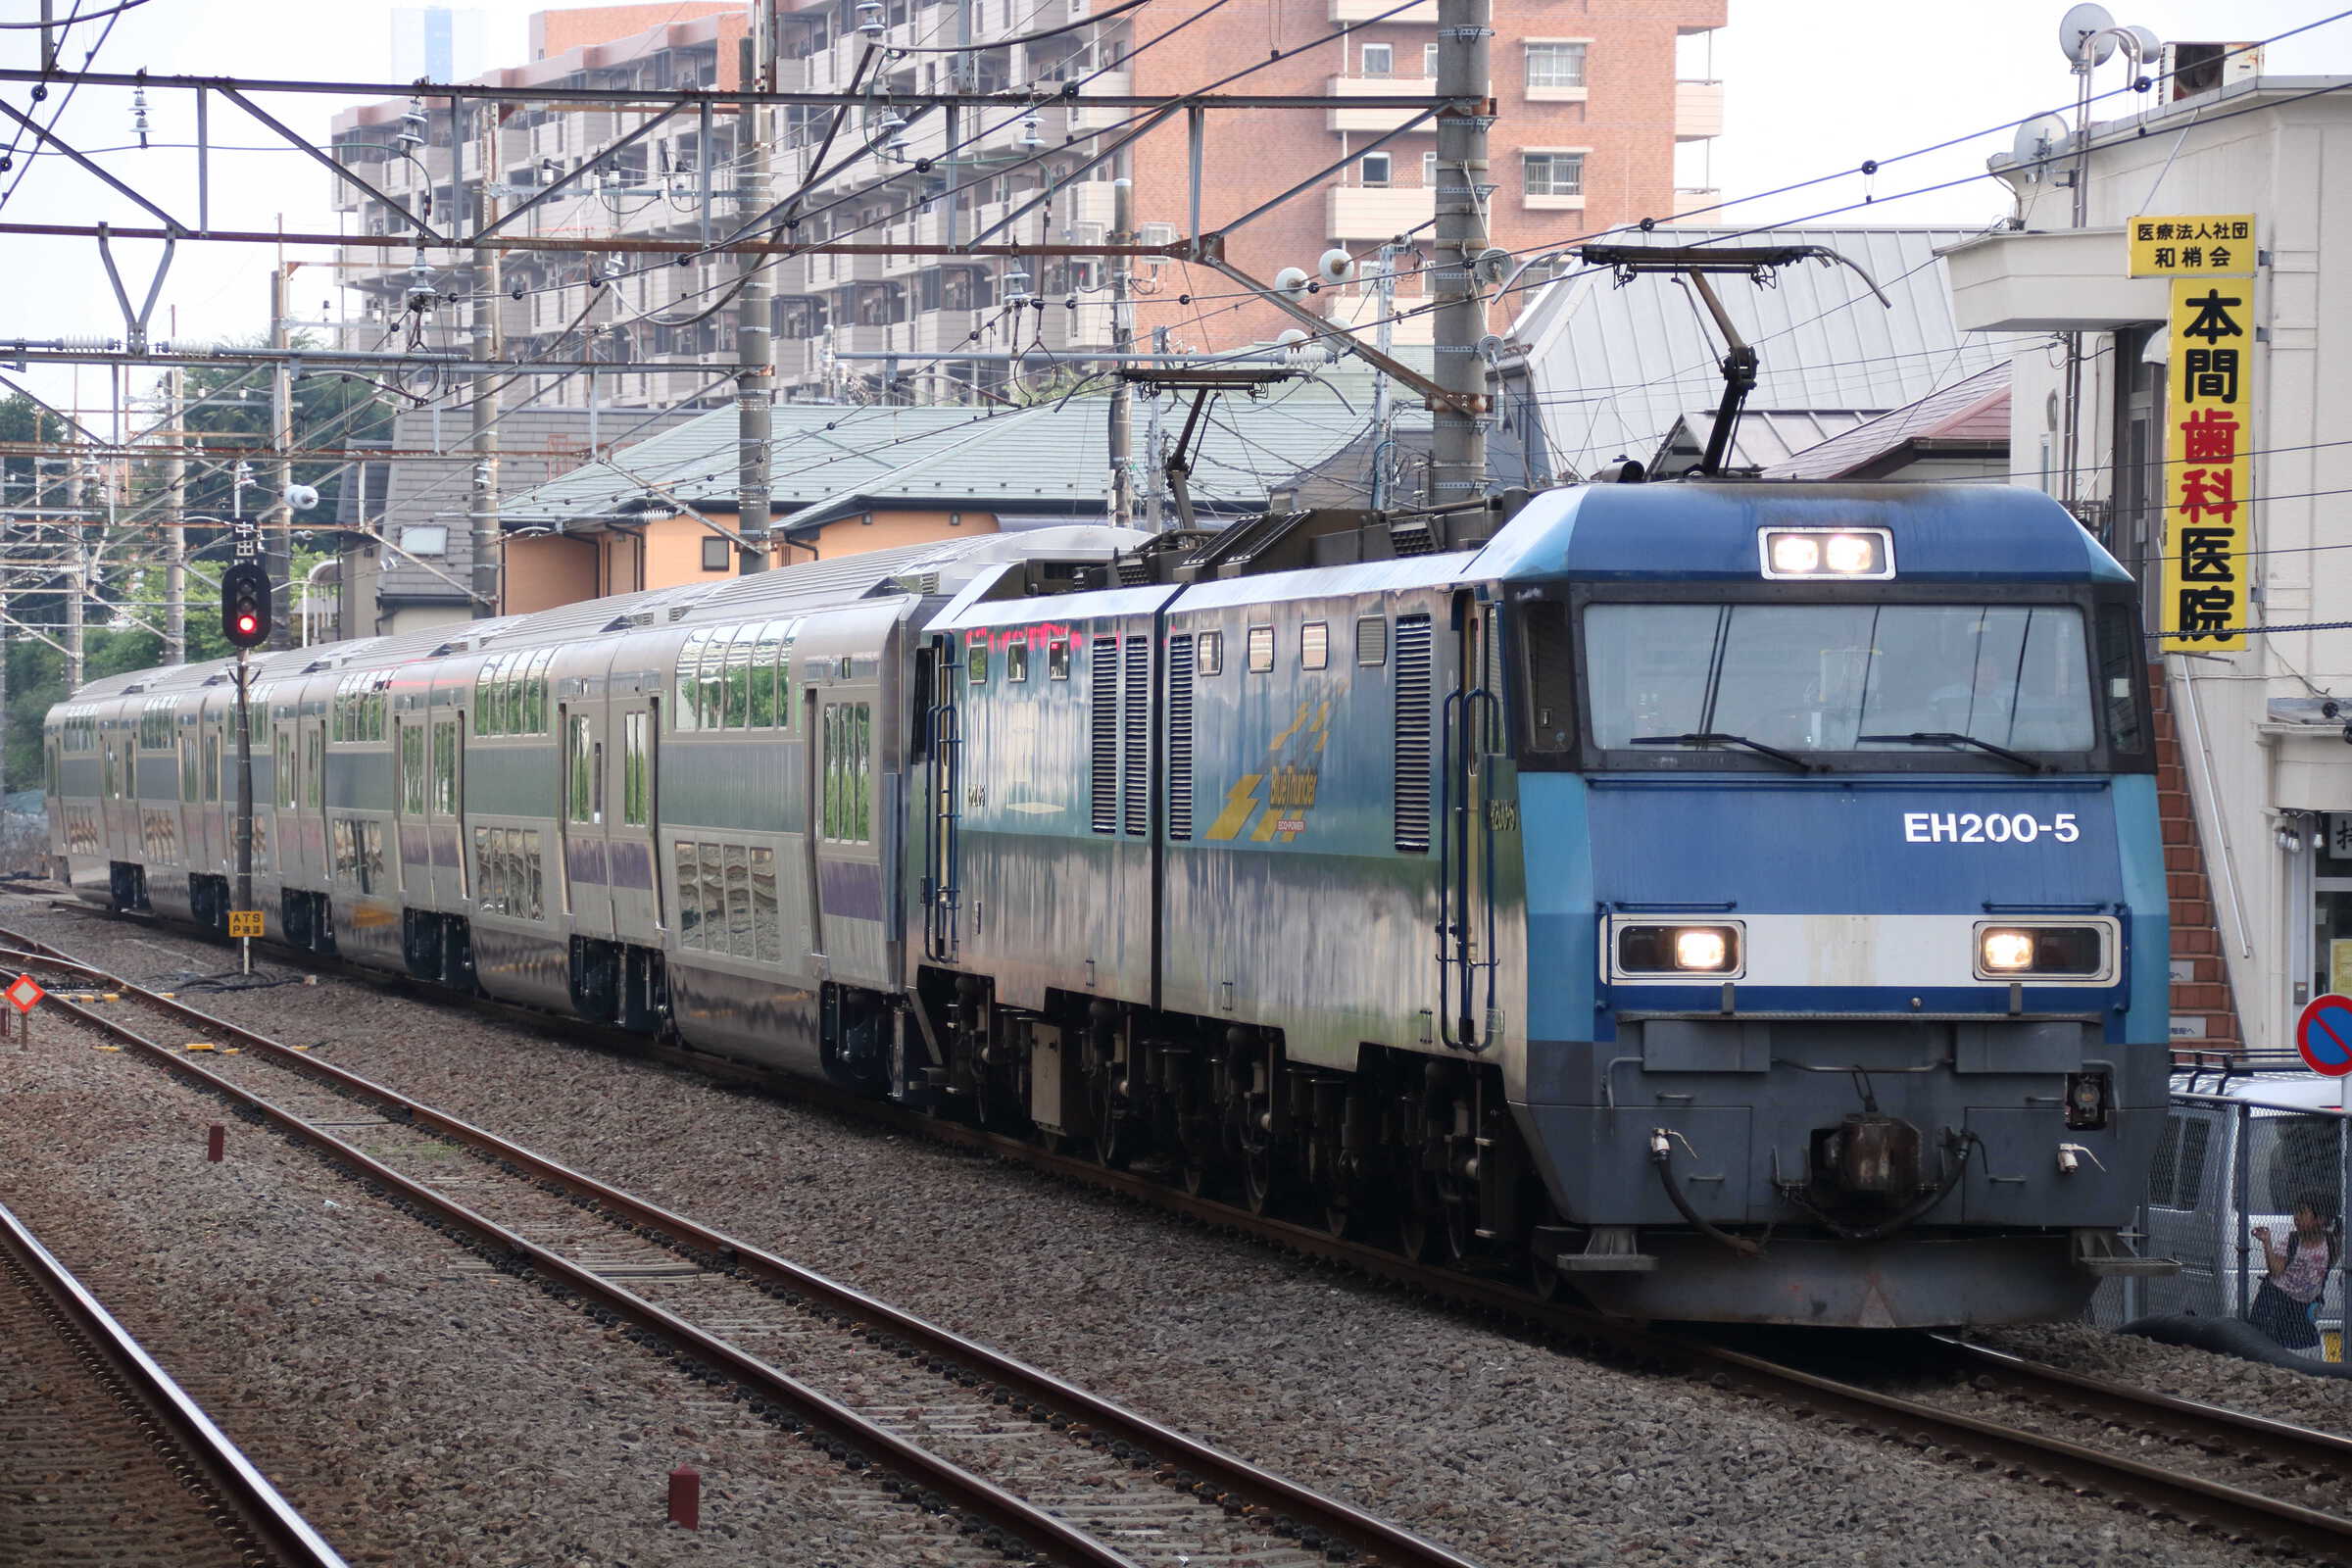 9771列車 甲56(逗子〜新津) E531系グリーン車 J-TREC横浜事業所出場甲種輸送 EH200-5②[高]+サロE531-26+サロE530-26+サロE531-25+サロE530-25+サロE531-24+サロE530-24